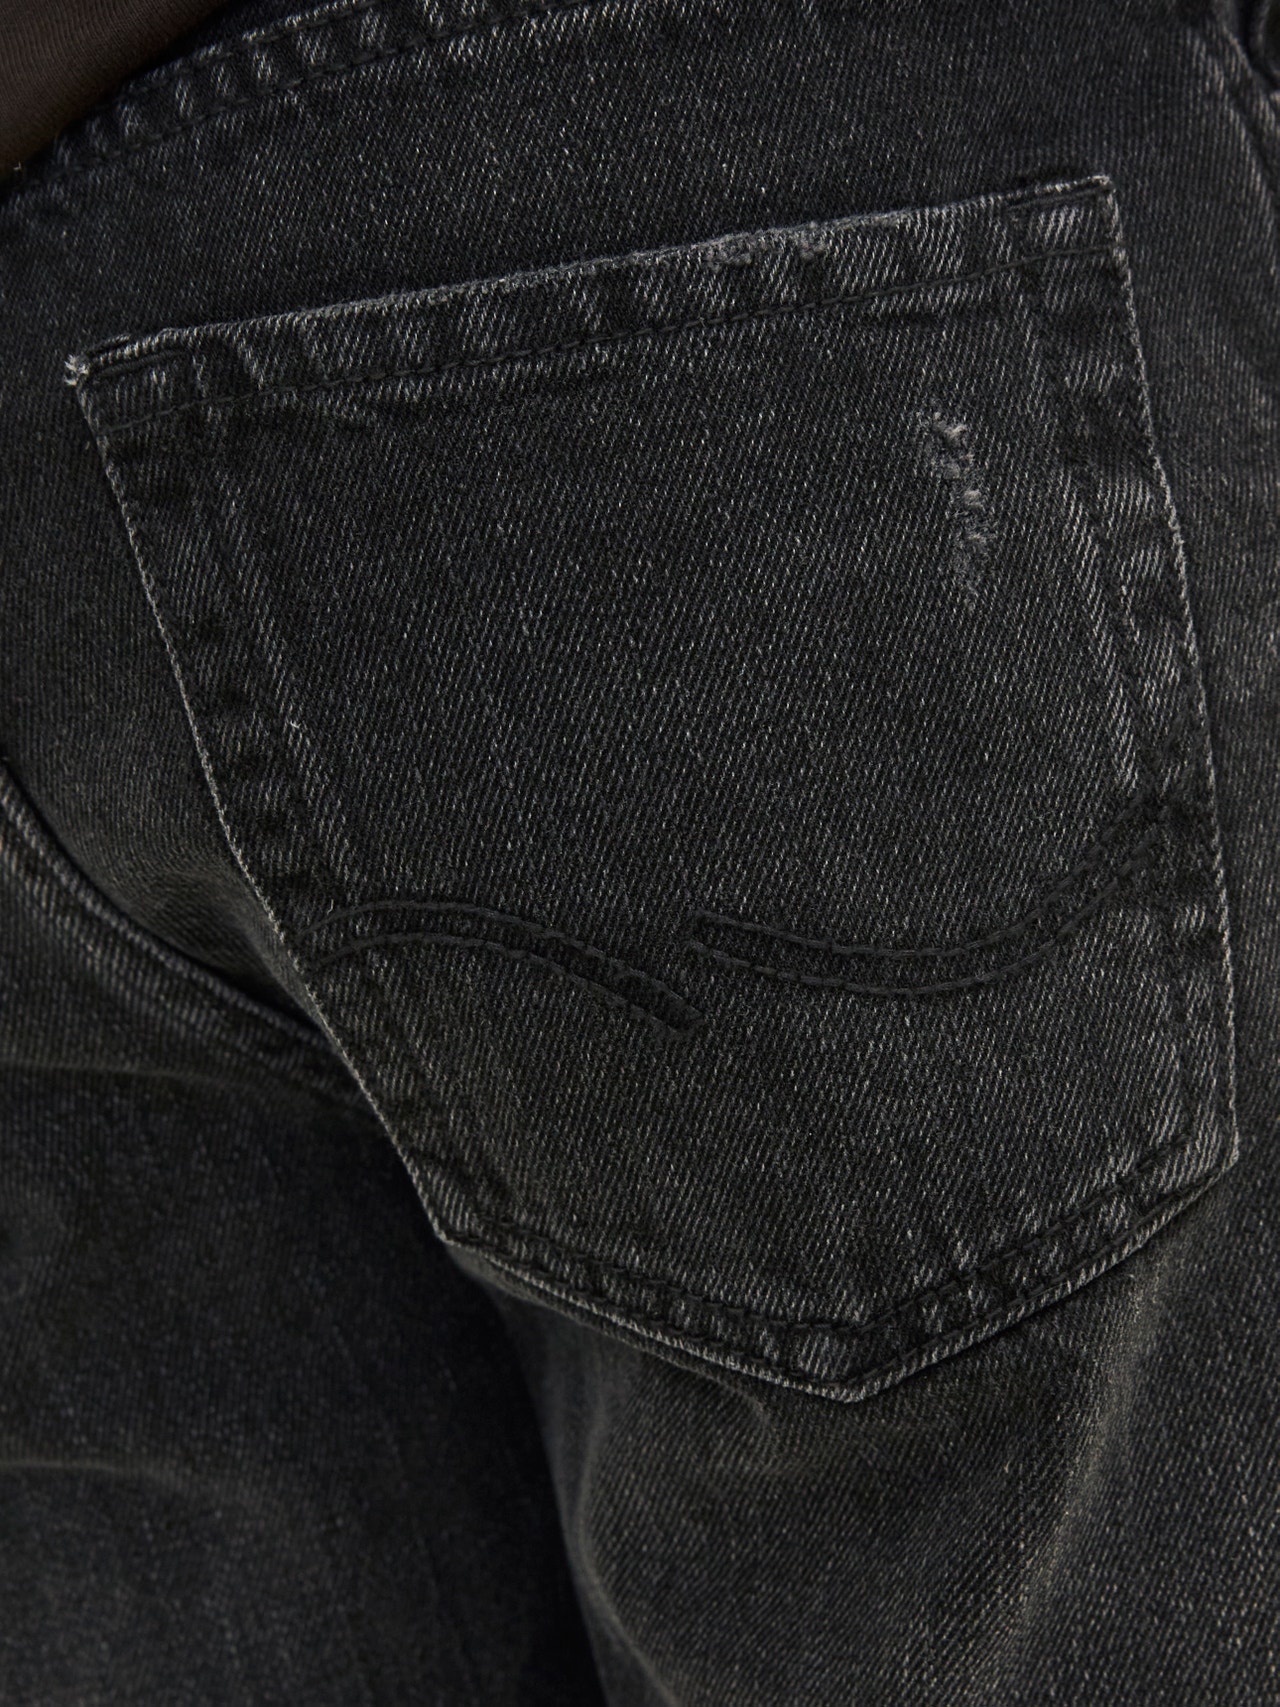 Jack & Jones Relaxed Fit Jeans Shorts Für jungs -Black Denim - 12249232